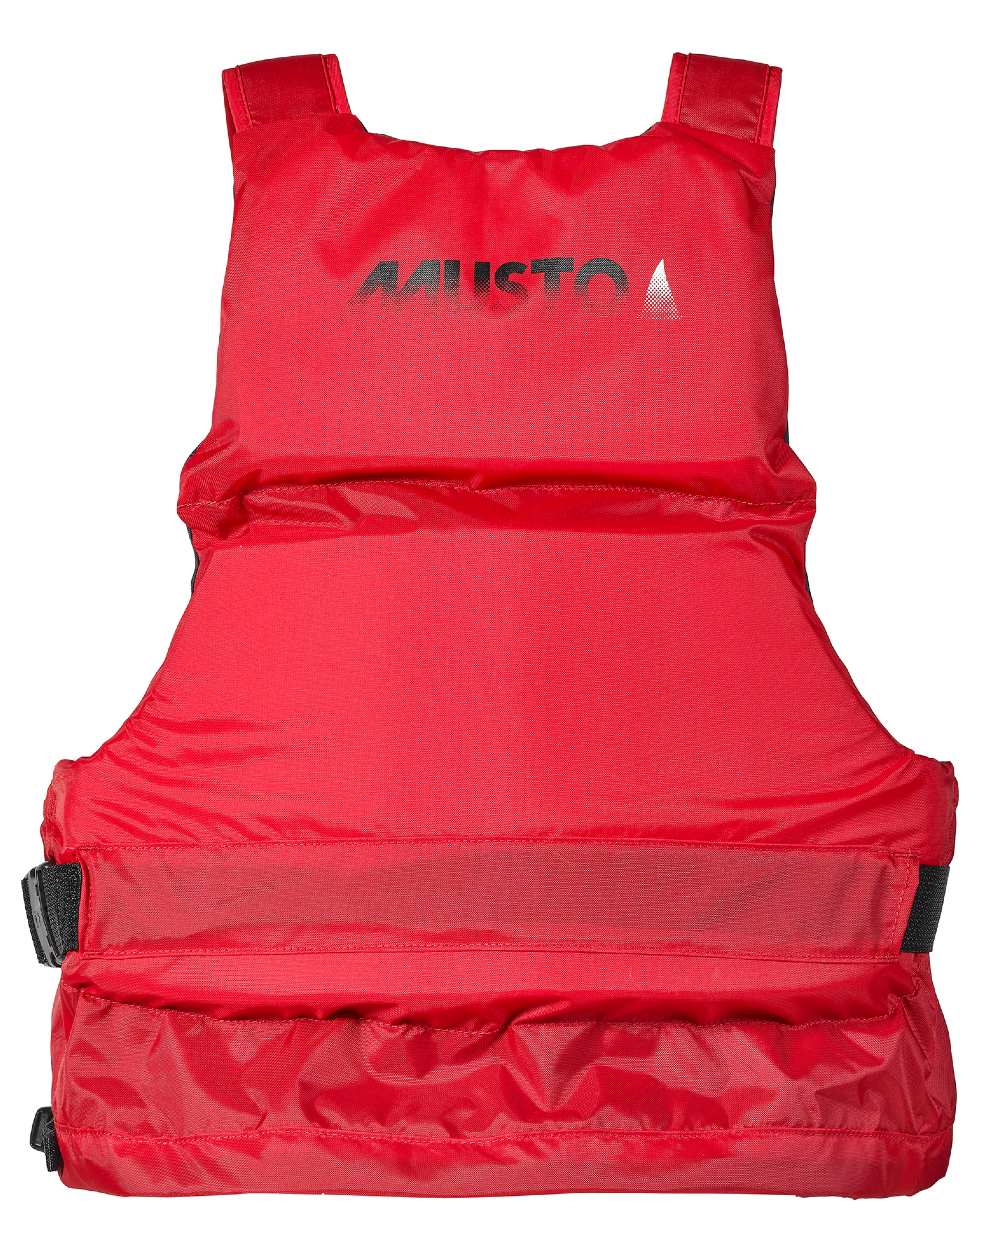 True Red Coloured Musto Regatta Buoyancy Aid On A White Background